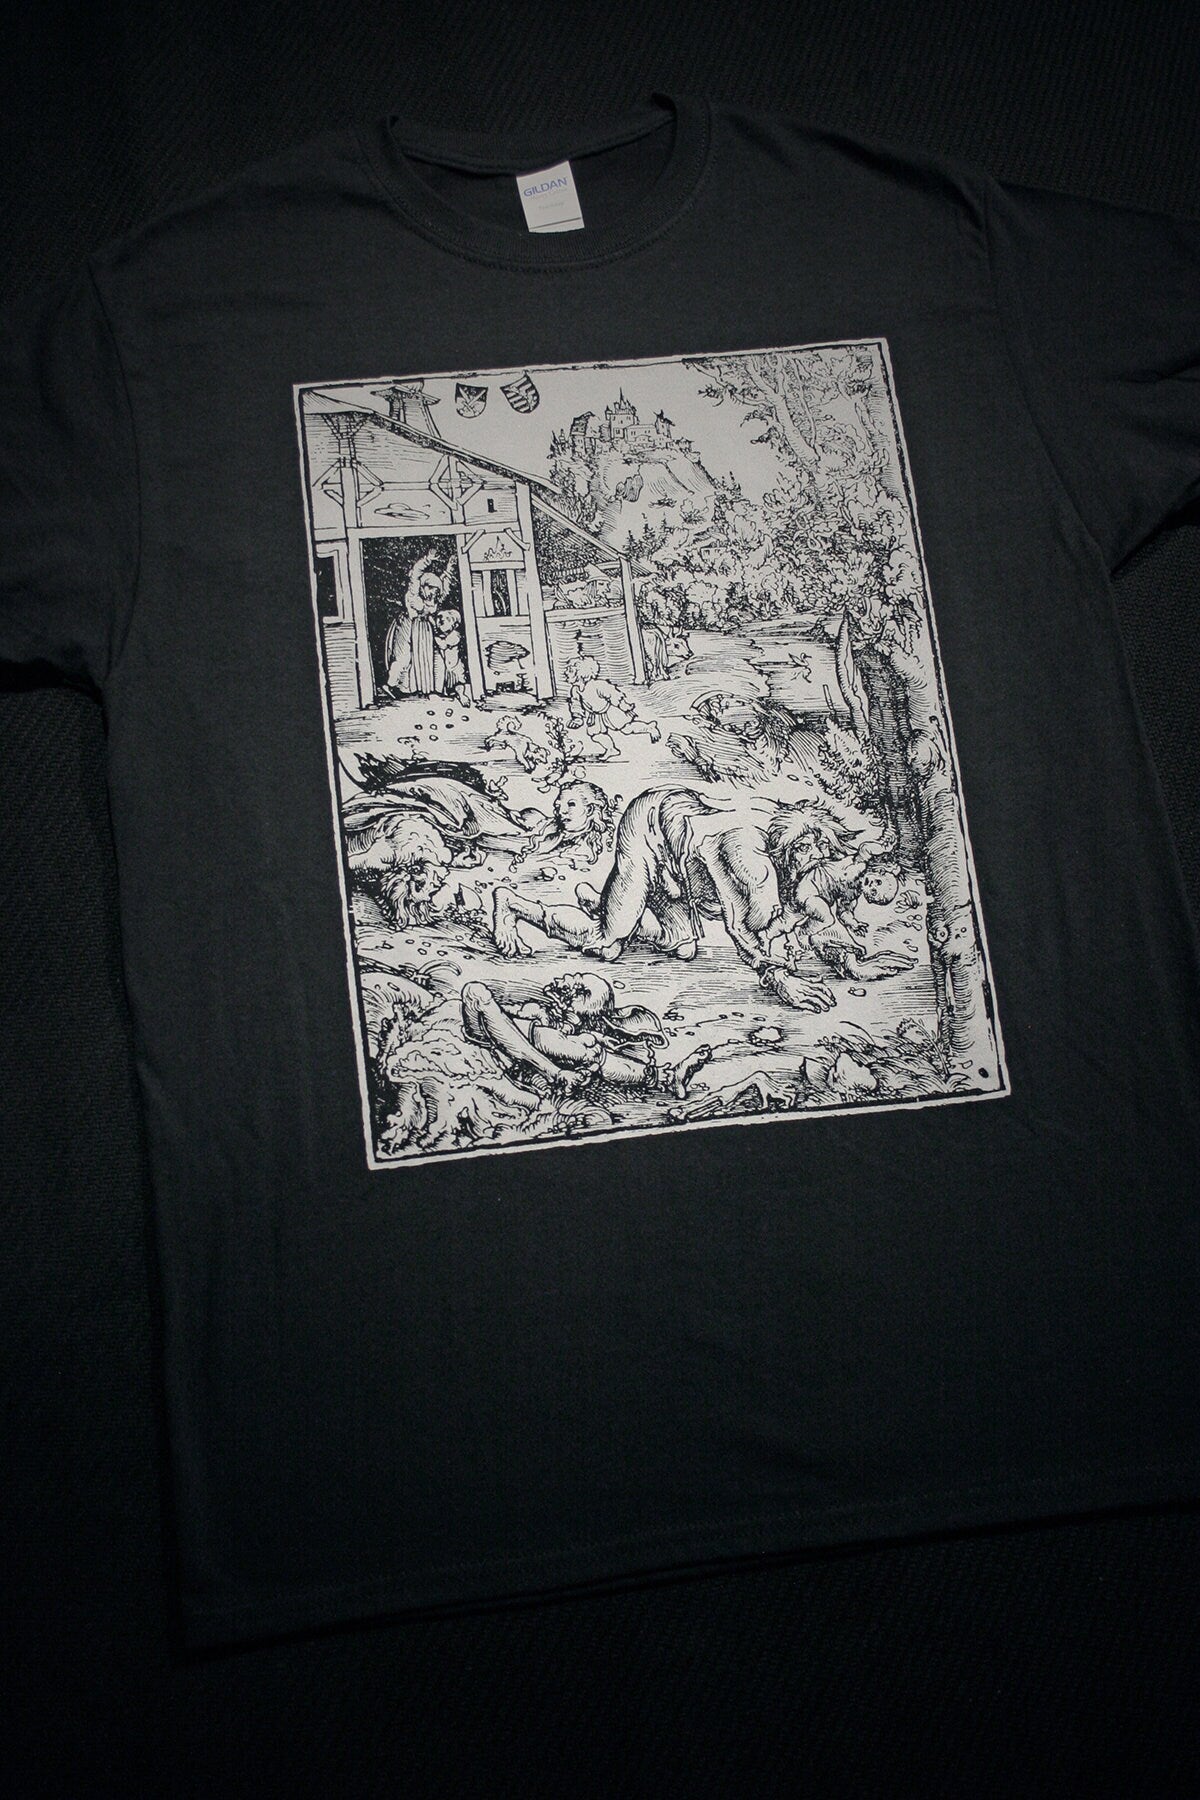 Werewolf attack, by Lucas Cranach der Ältere (1512) - T-shirt